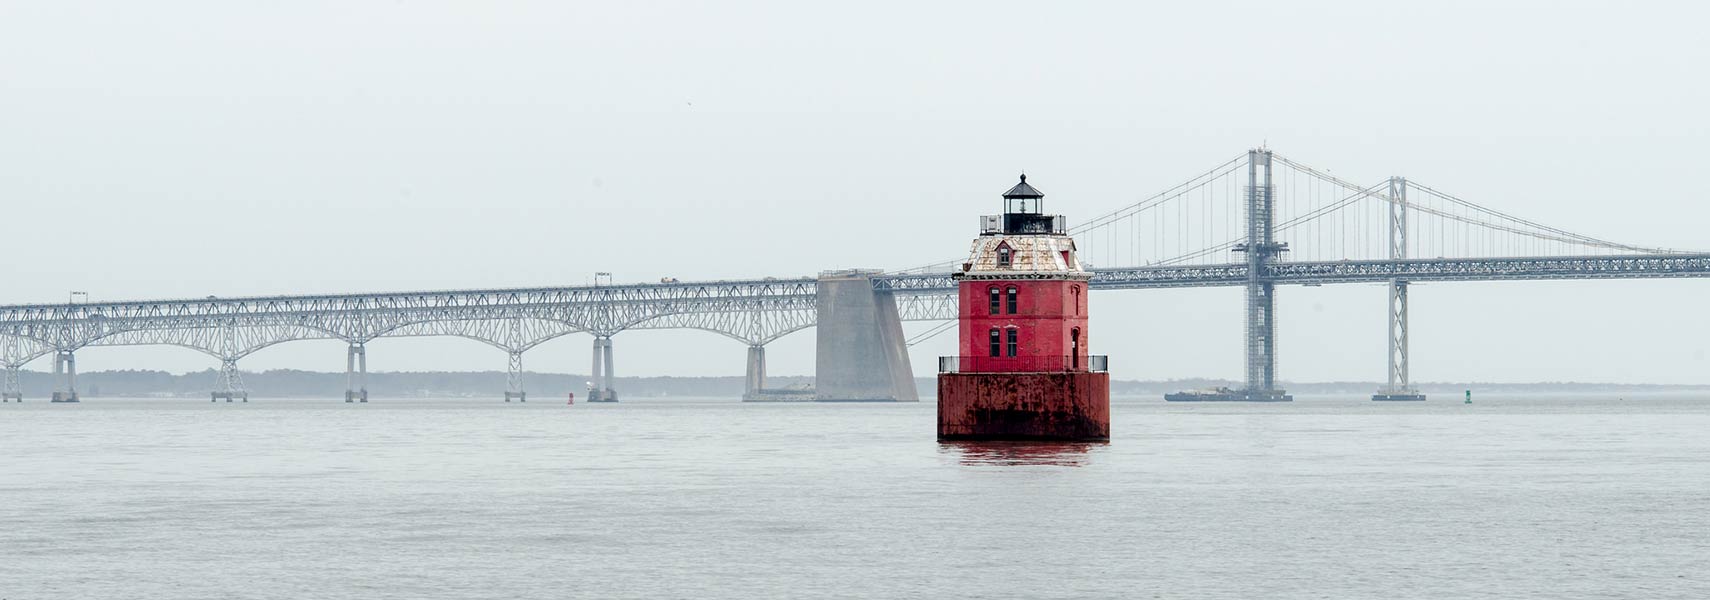 Chesapeake Bay Bridge over the Chesapeake Bay with Sandy Point Shoal Lighthouse